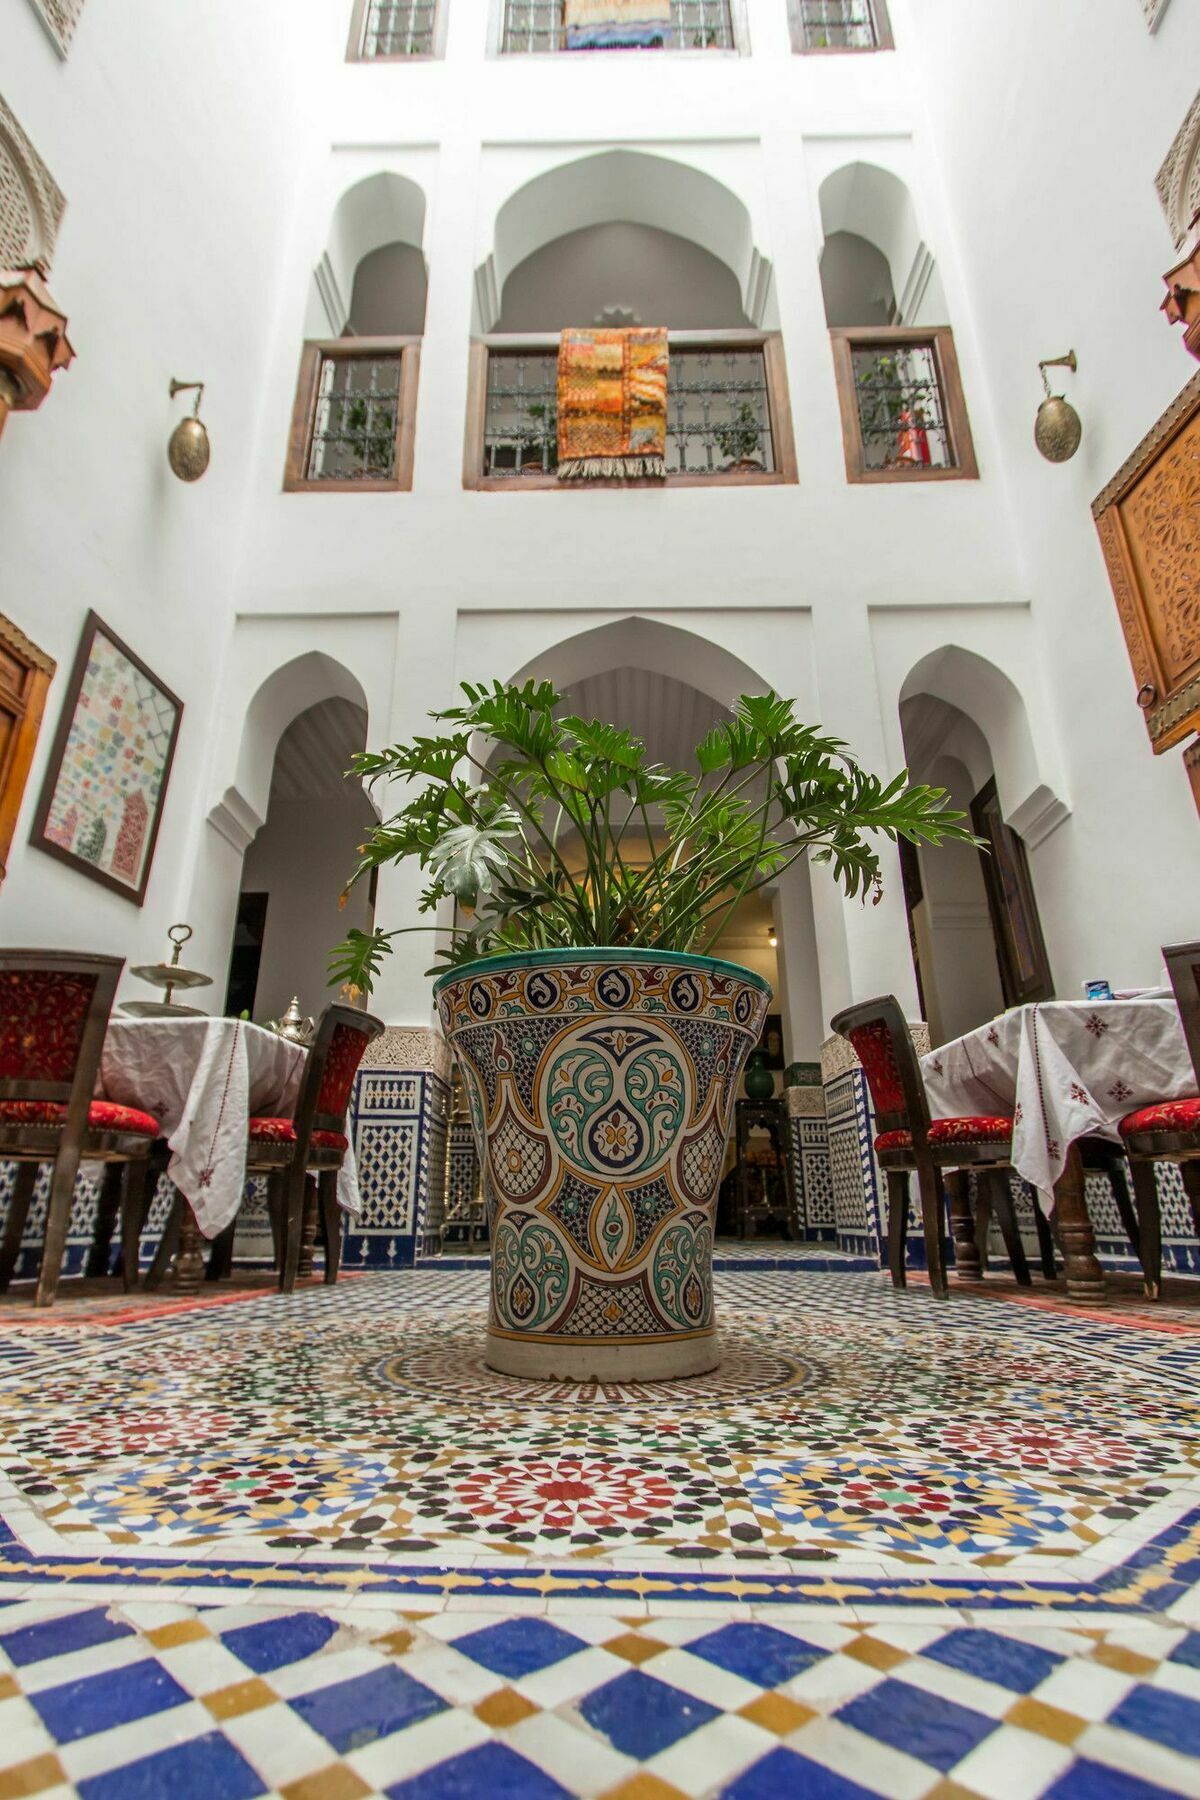 Dar Fes Medina Ziat Hotel Exterior photo